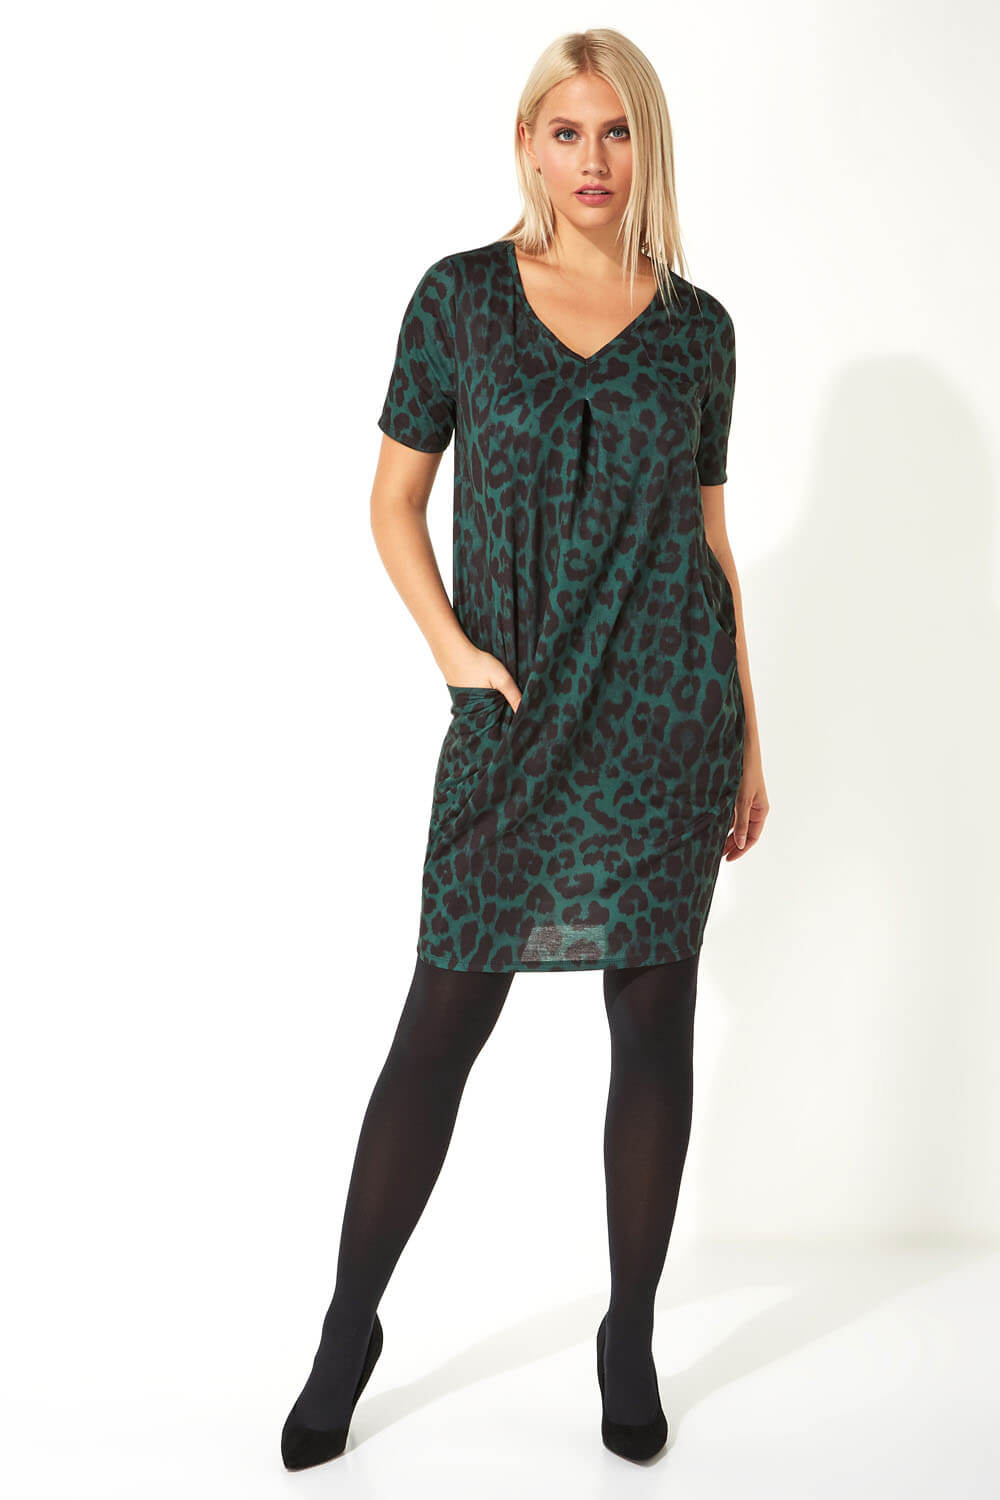 Green Animal Leopard Print Dress, Image 2 of 5